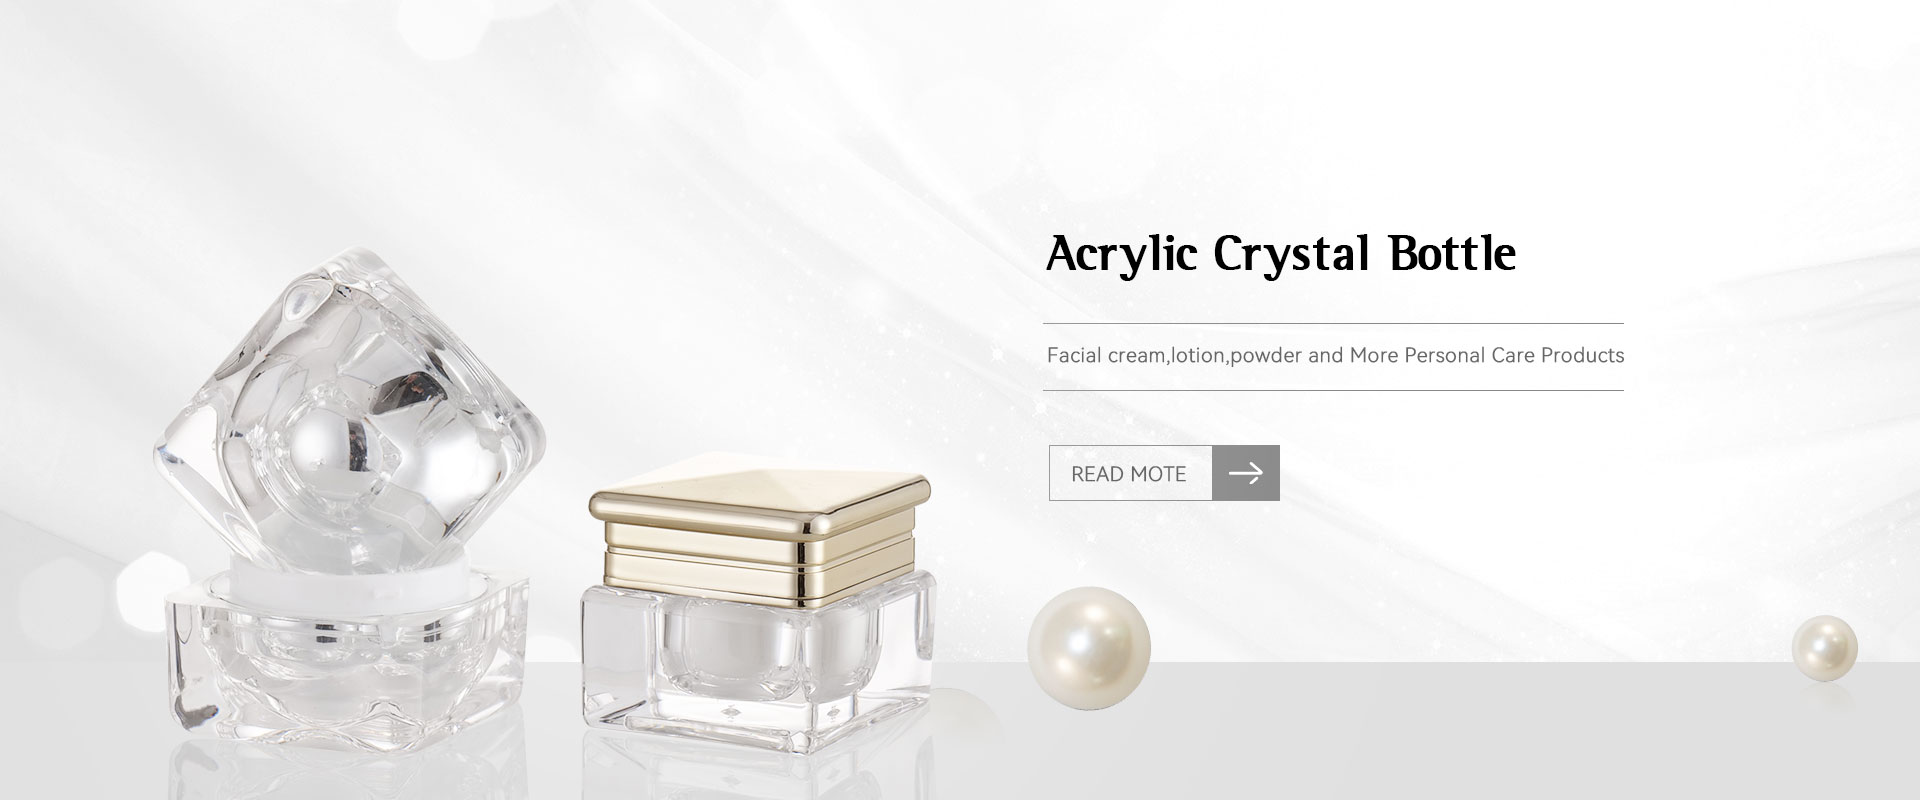 Acrylic Crystal Bottle Manufacturer